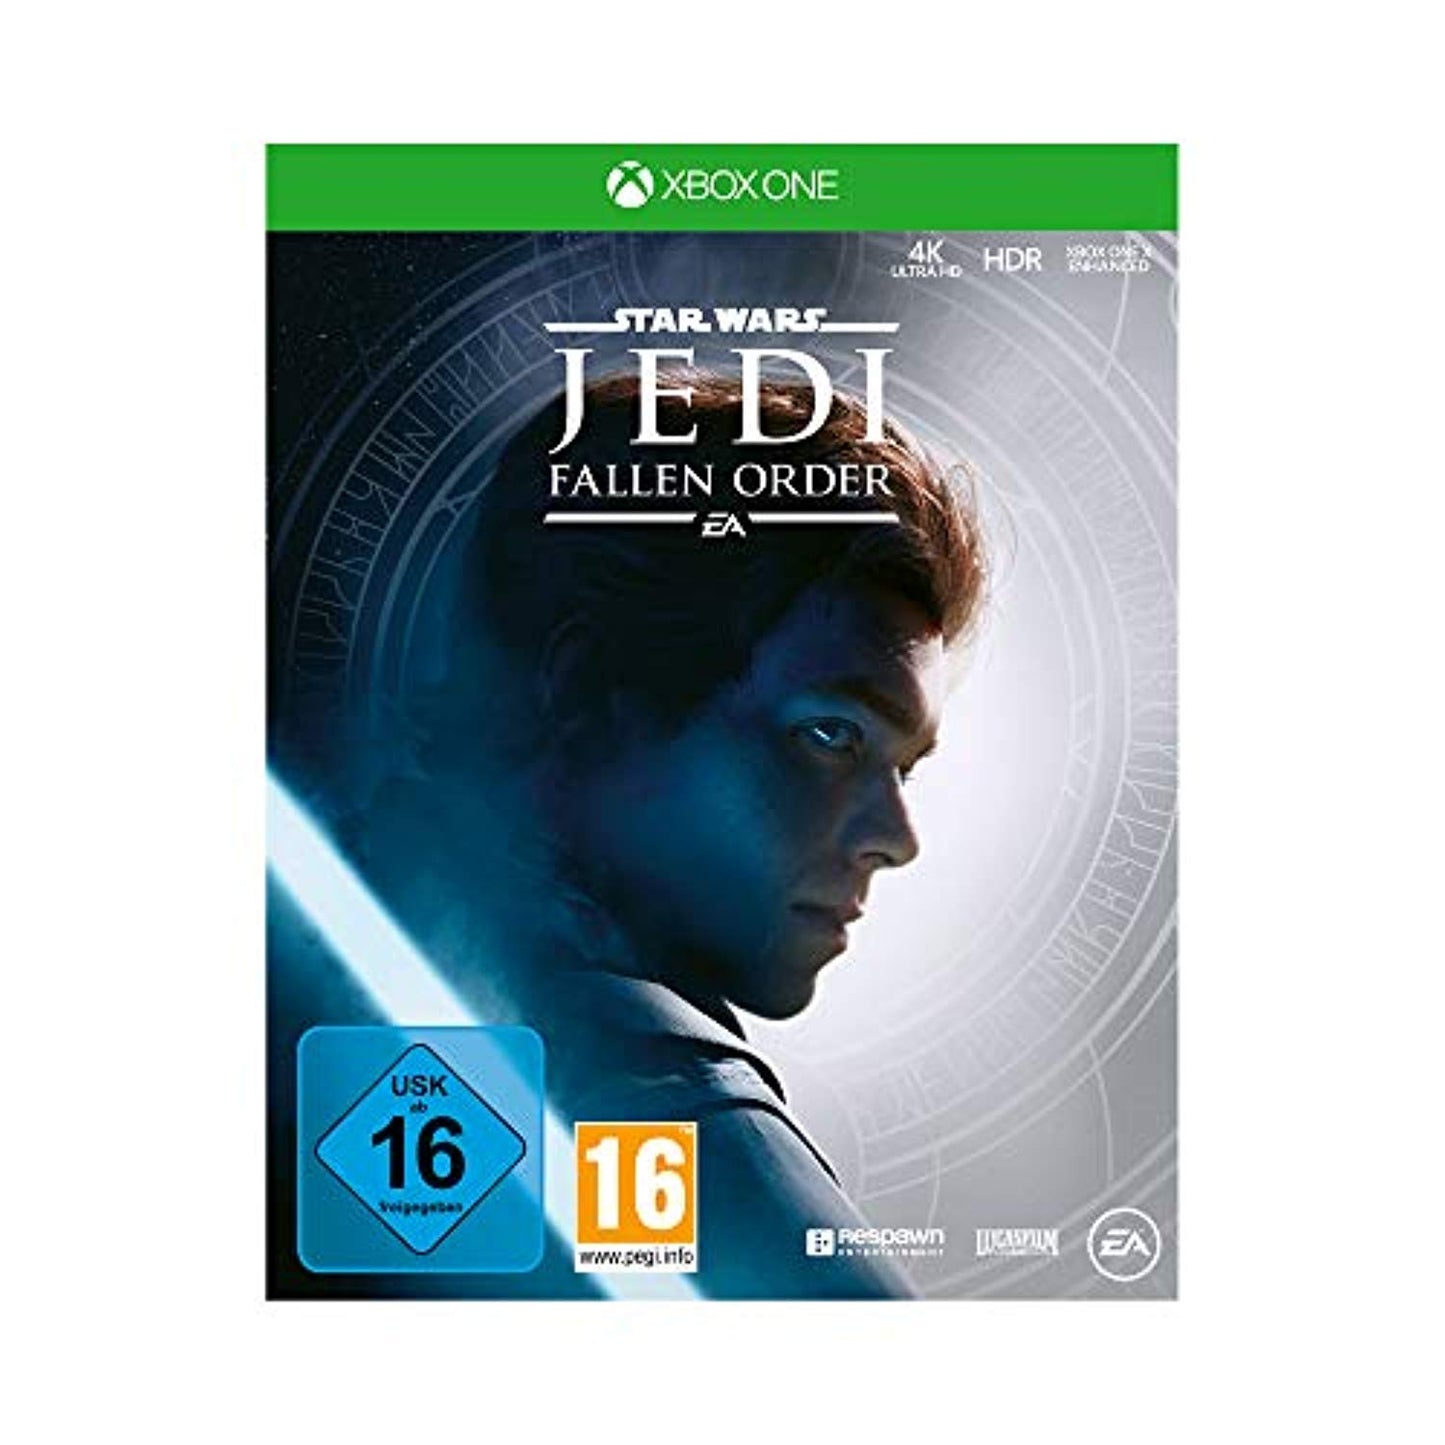 Xbox One X 1TB Console - Star Wars Jedi: Fallen Order Bundle (Xbox One) - Offer Games